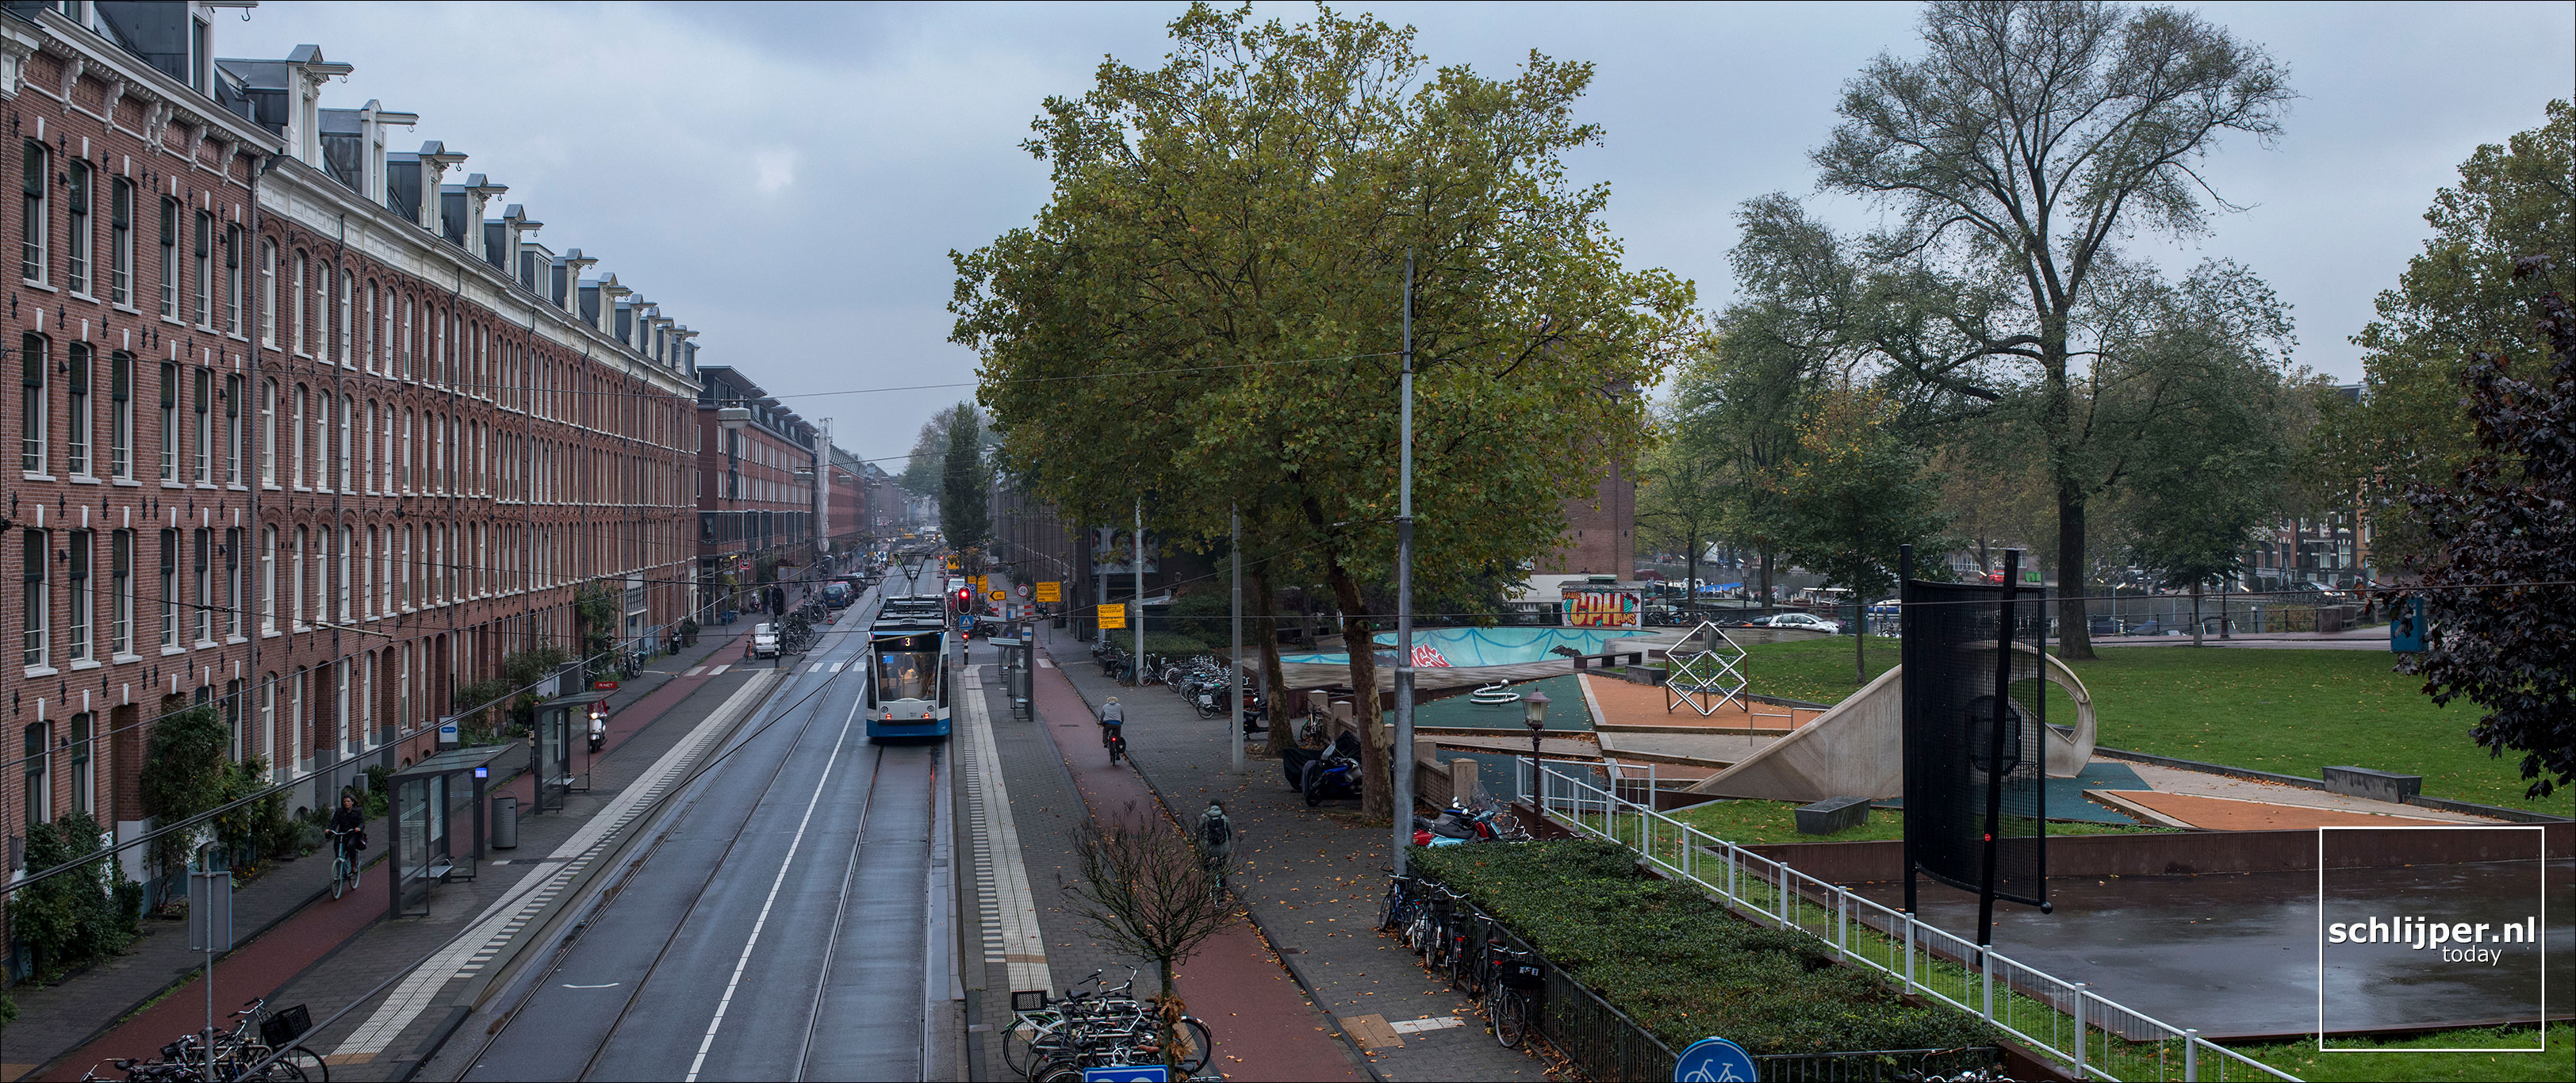 Nederland, Amsterdam, 26 oktober 2018